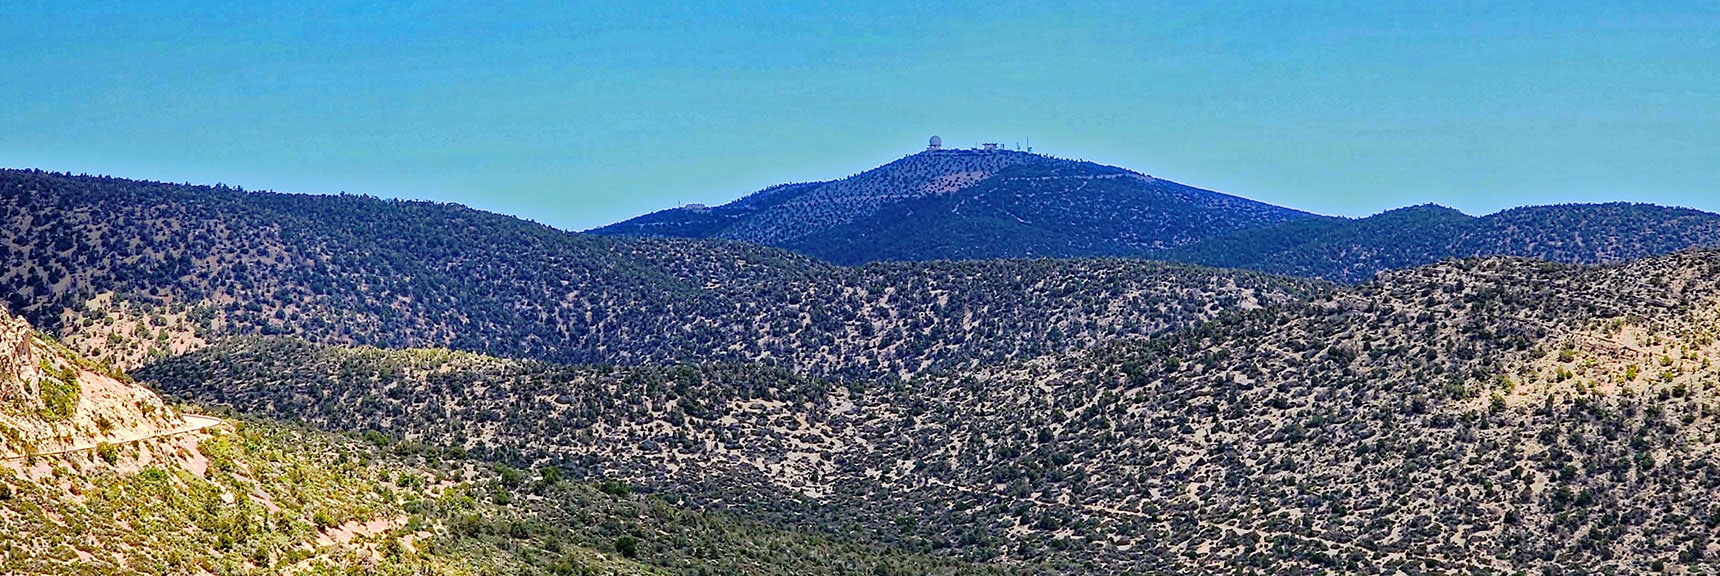 Closer View of Angel Peak | Escarpment Trail | Mt Charleston Wilderness | Spring Mountains, Nevada